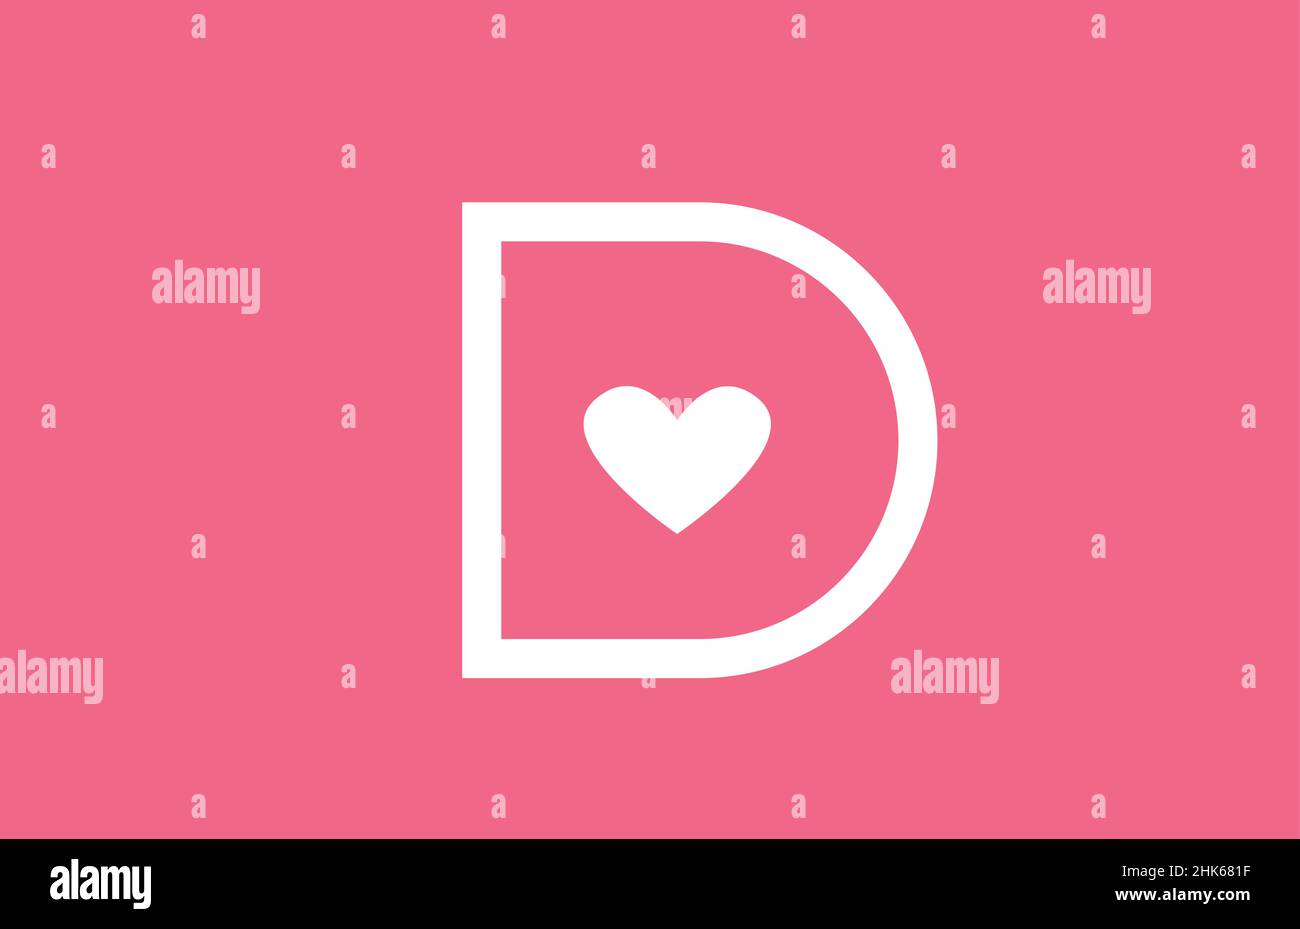 Heart Shaped Letter D or Letter DD Iconic Logo Design, logo design